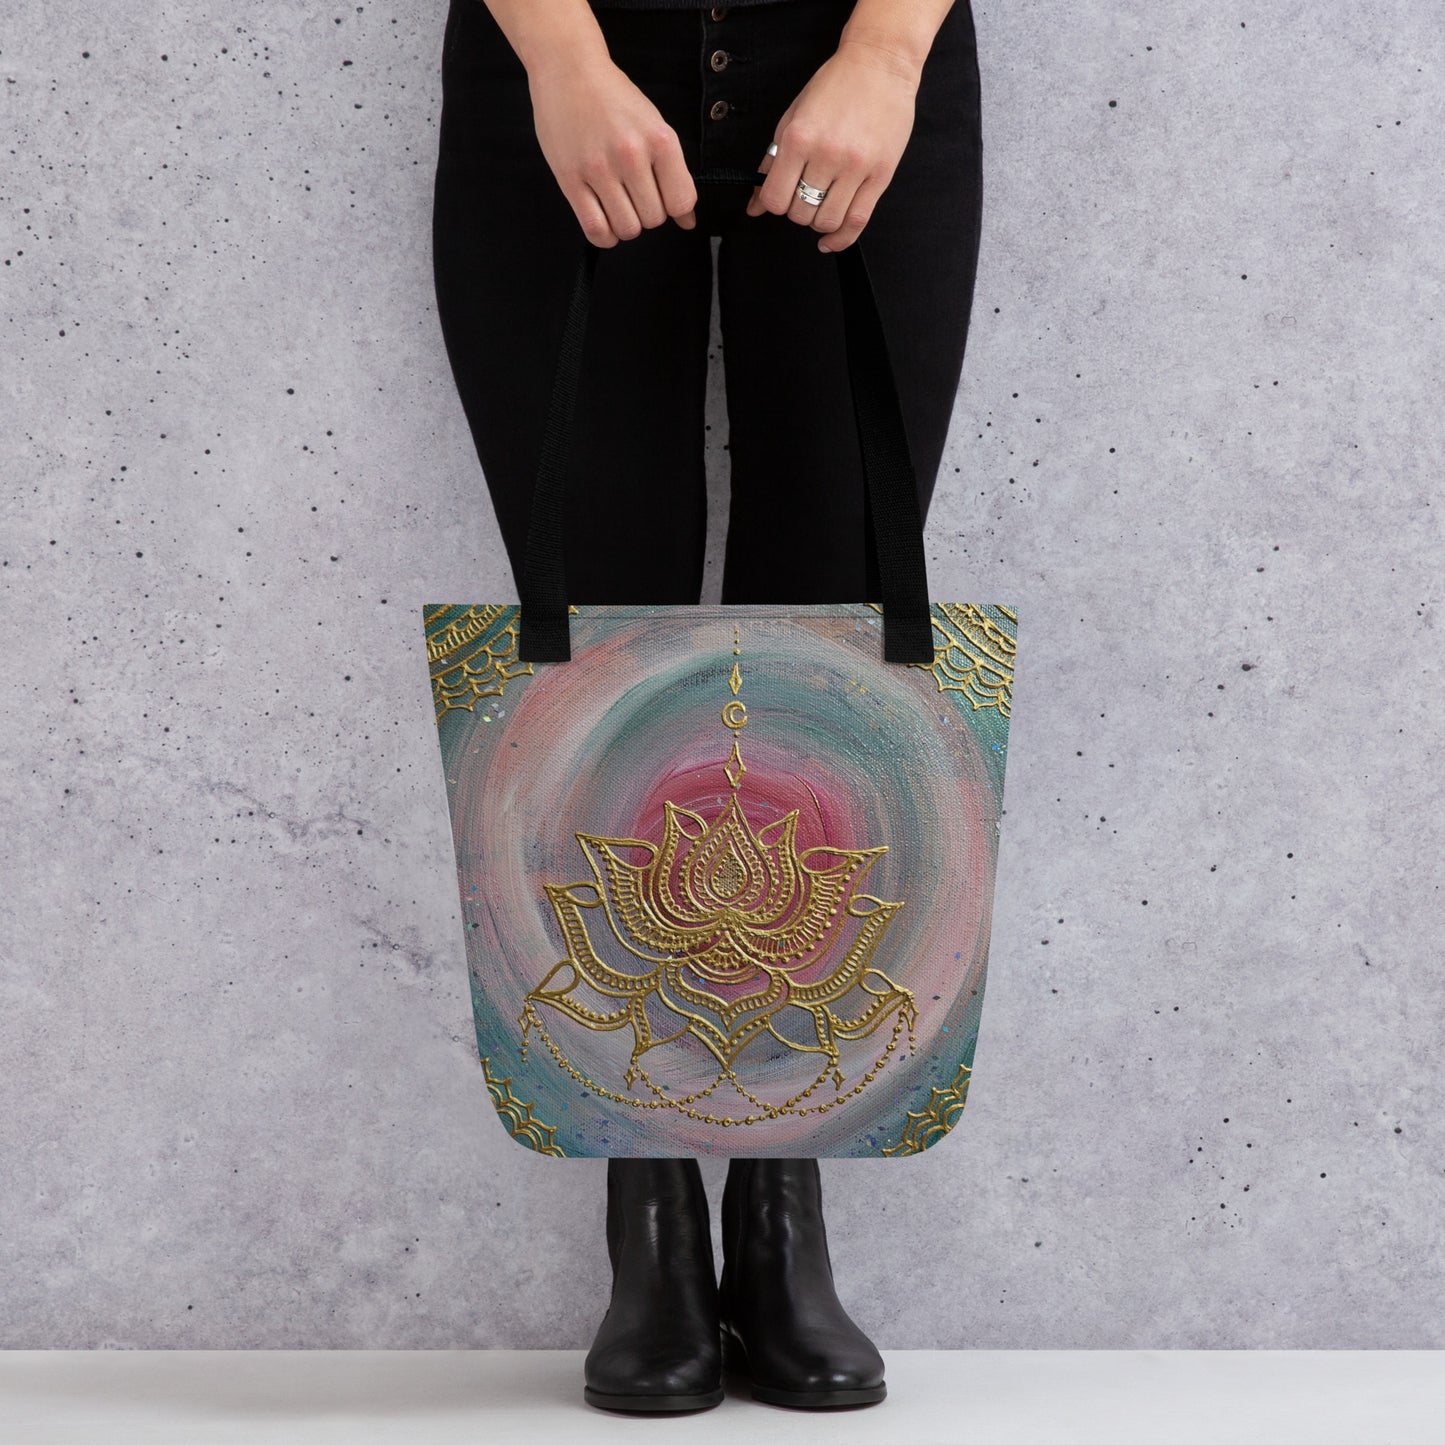 "Self-Acceptance" Art Print Tote bag